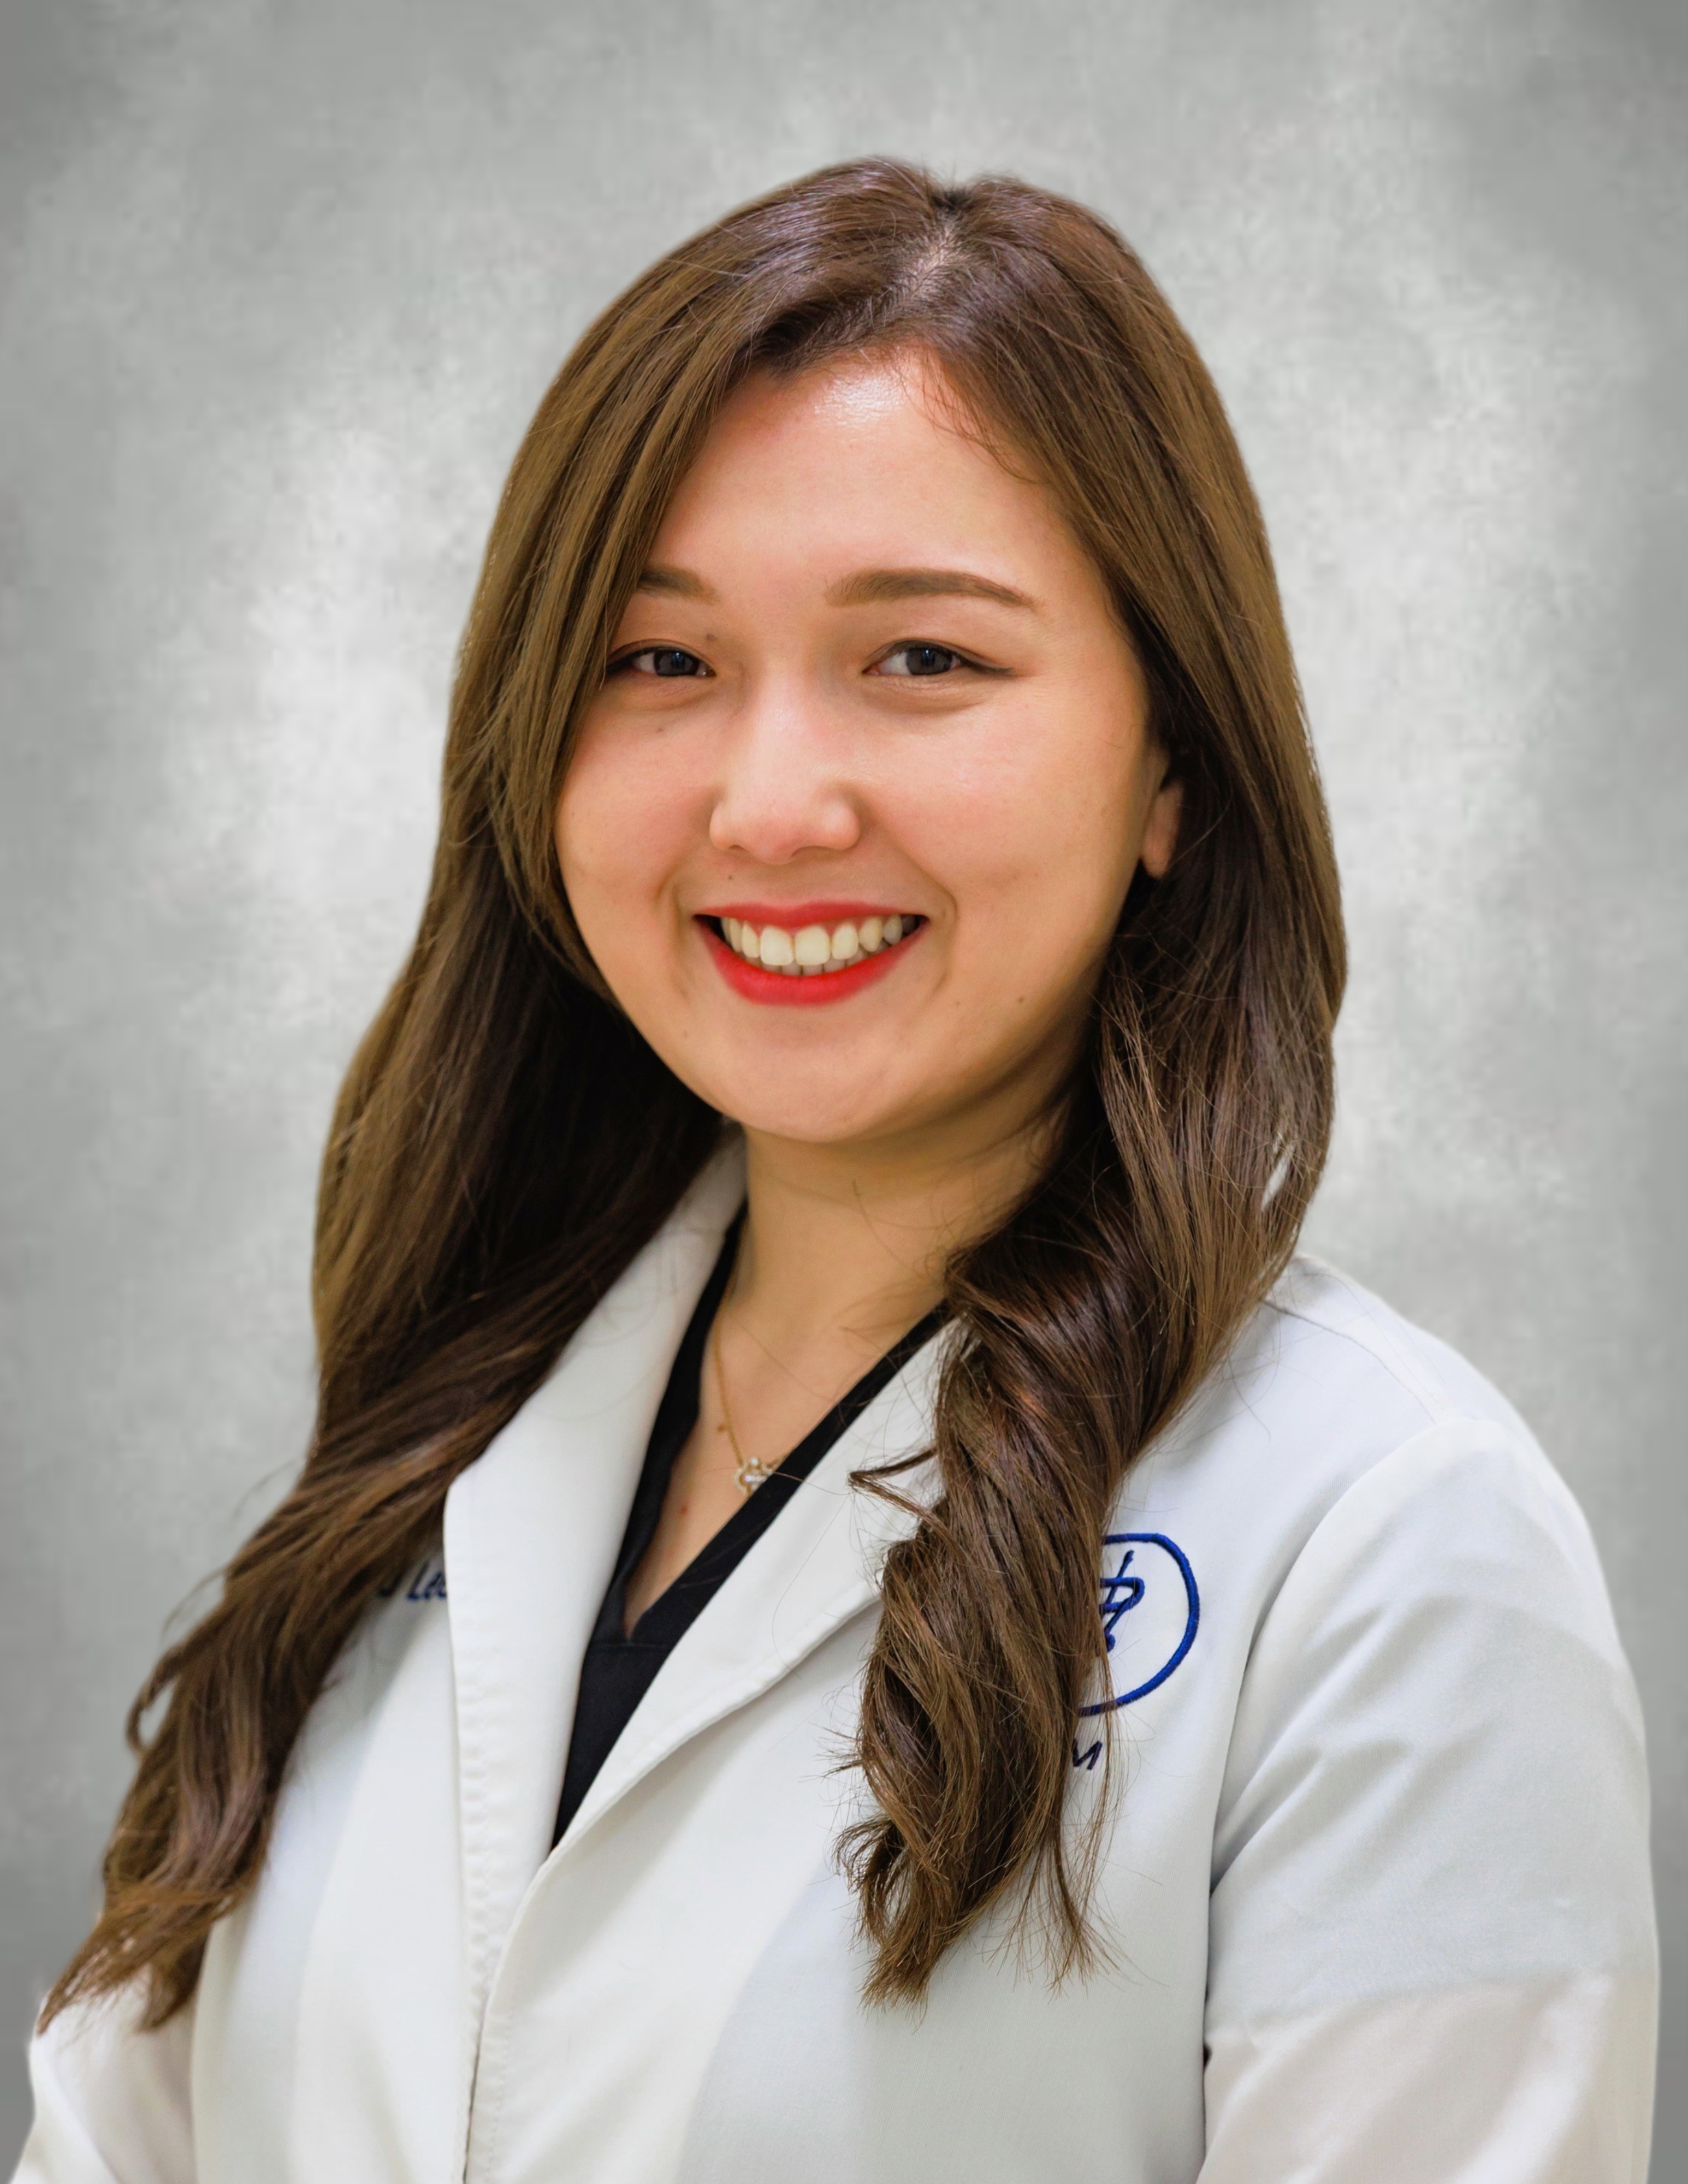 Dr. Lee smiling in her lab coat